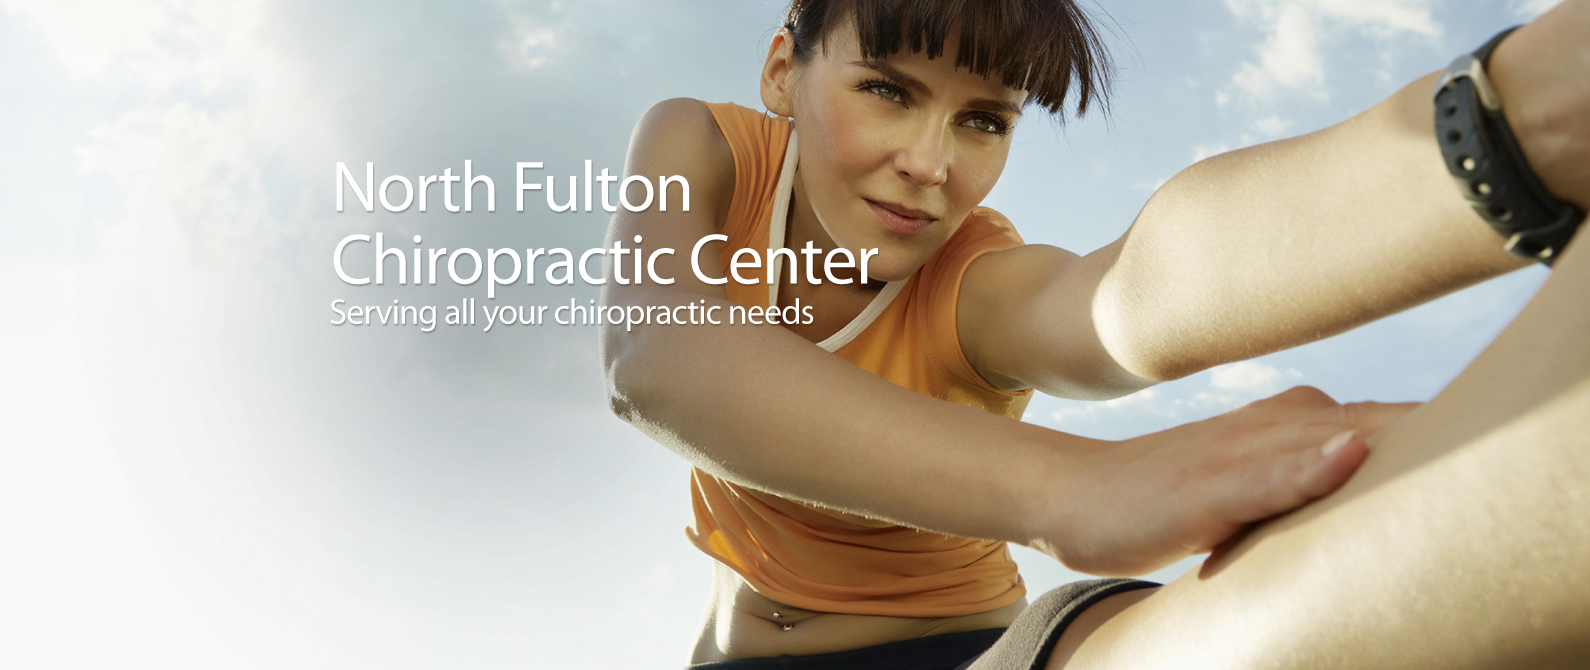 North Fulton Chiropractic Center